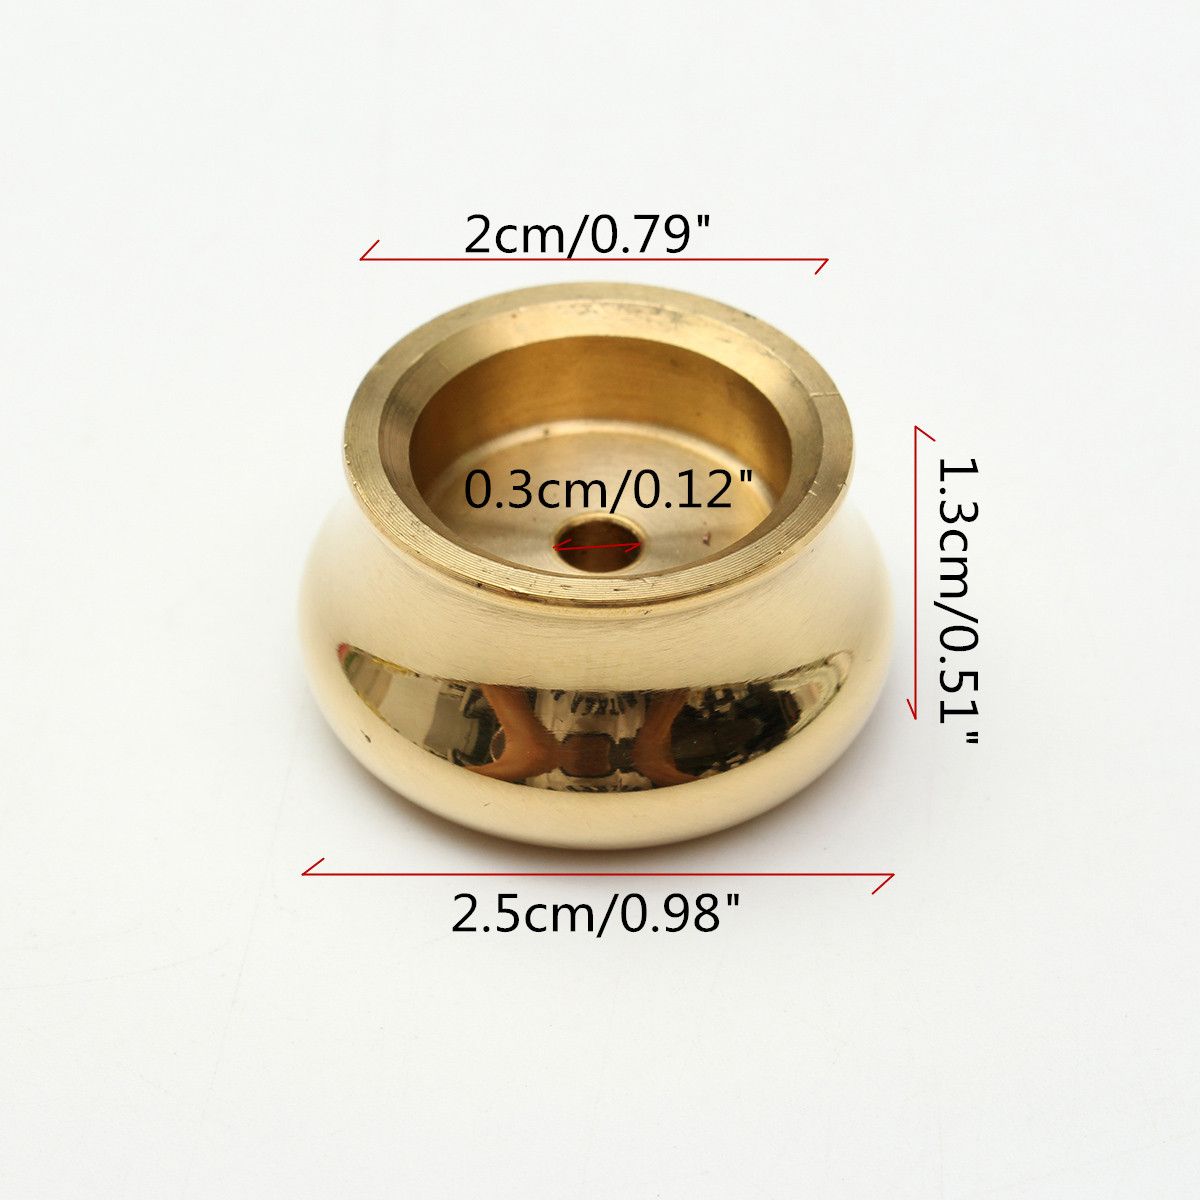 Dual-purpose-Mini-Copper-Incense-Cone-Stick-Burner-Holder-Plate-Censer-Tower-Bowl-Meditation-Decor-1141321